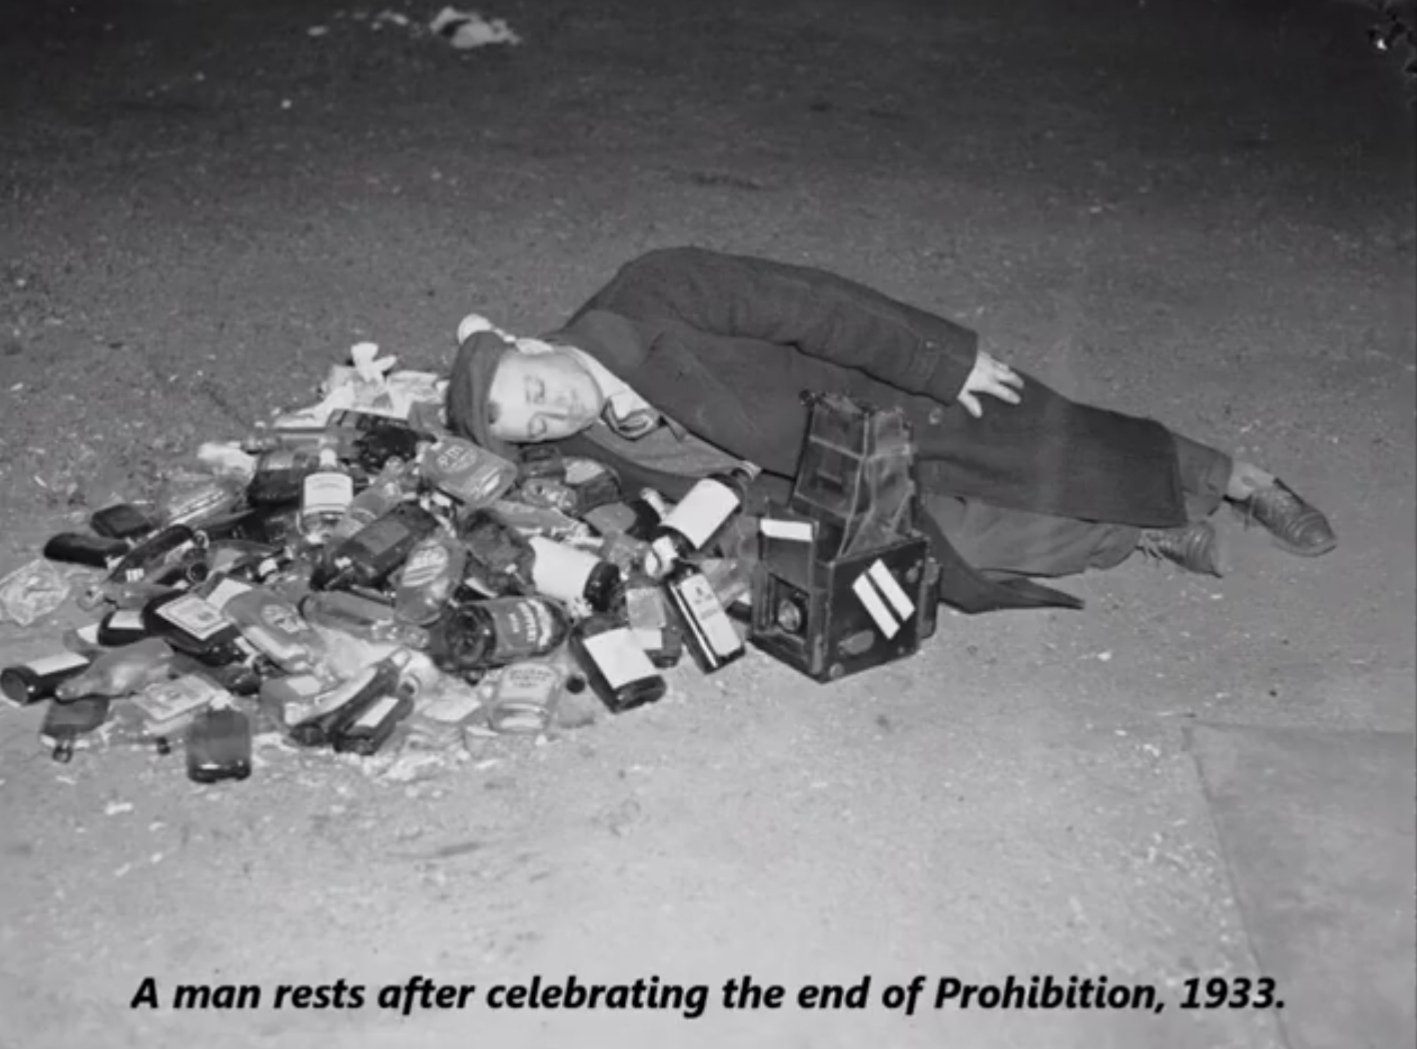 man celebrating end of prohibition - A man rests after celebrating the end of Prohibition, 1933.